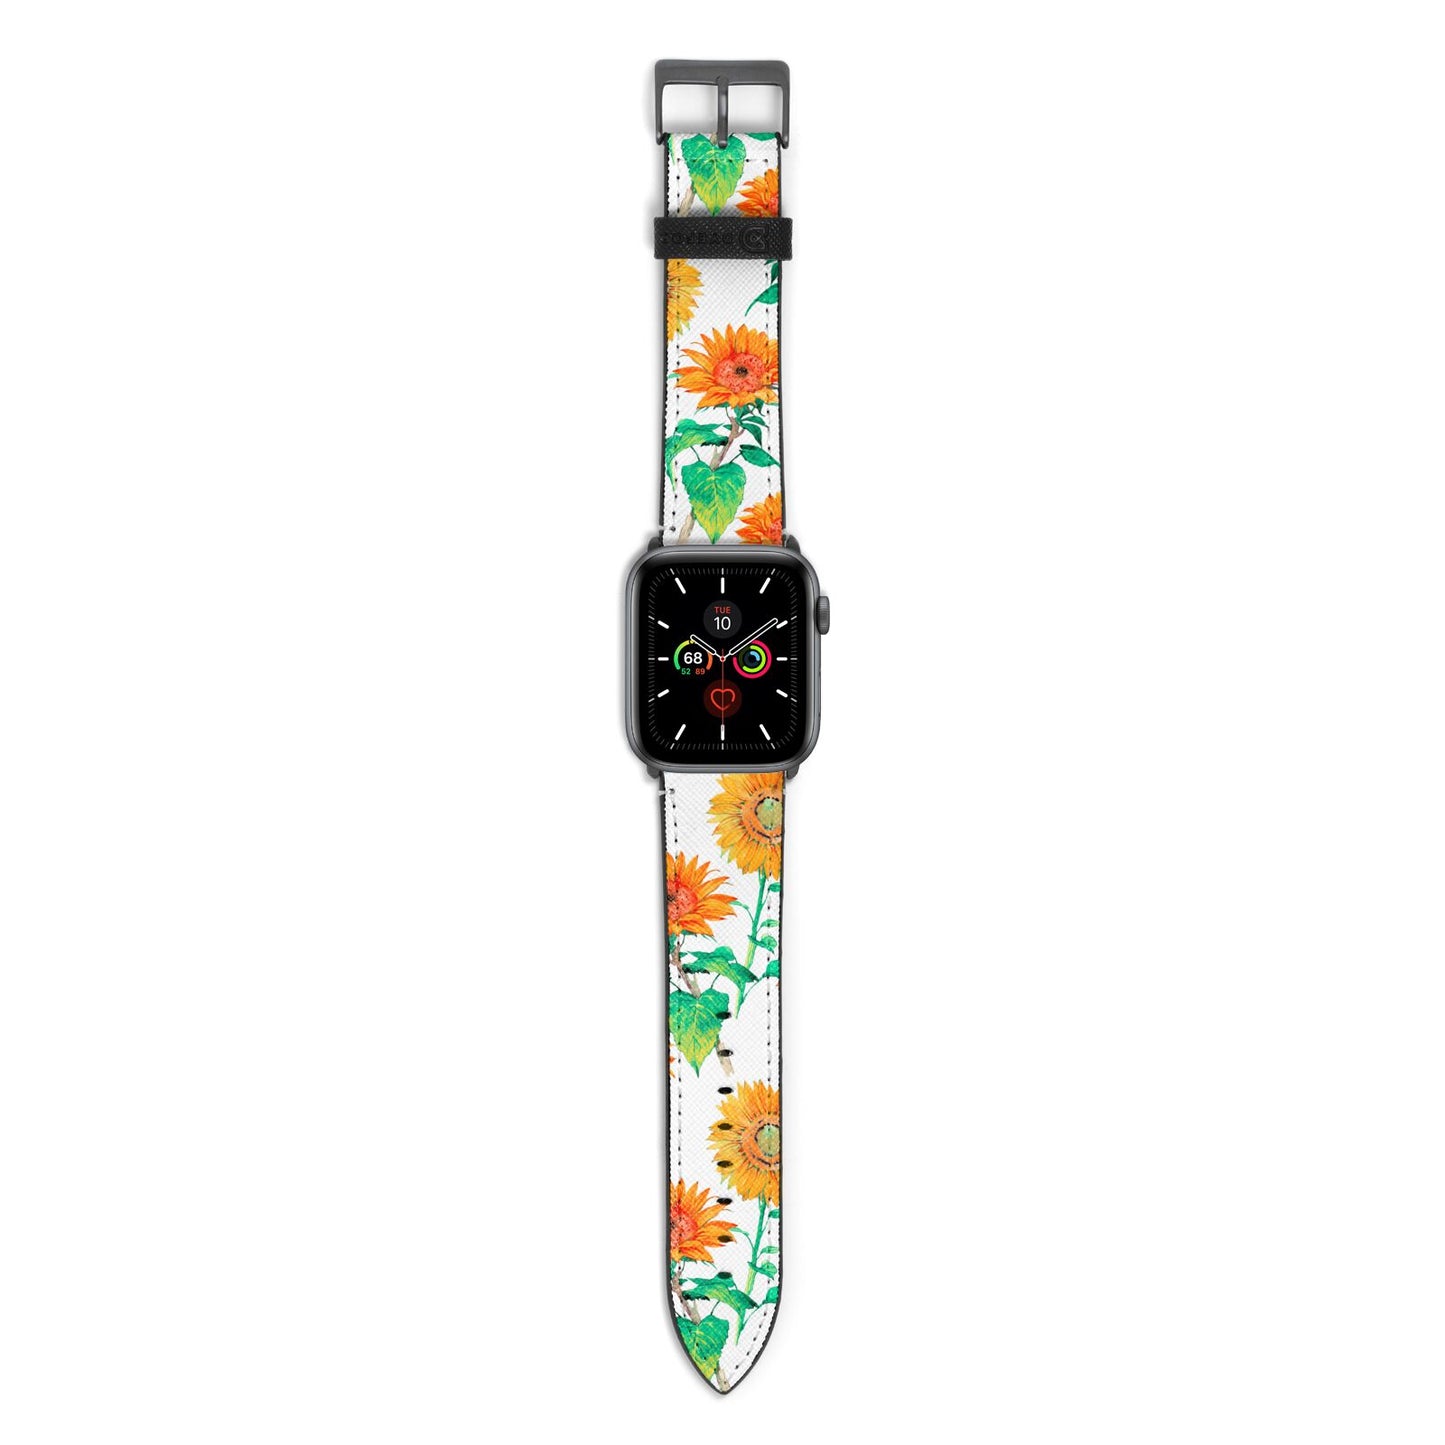 Sunflower Pattern Apple Watch Strap with Space Grey Hardware